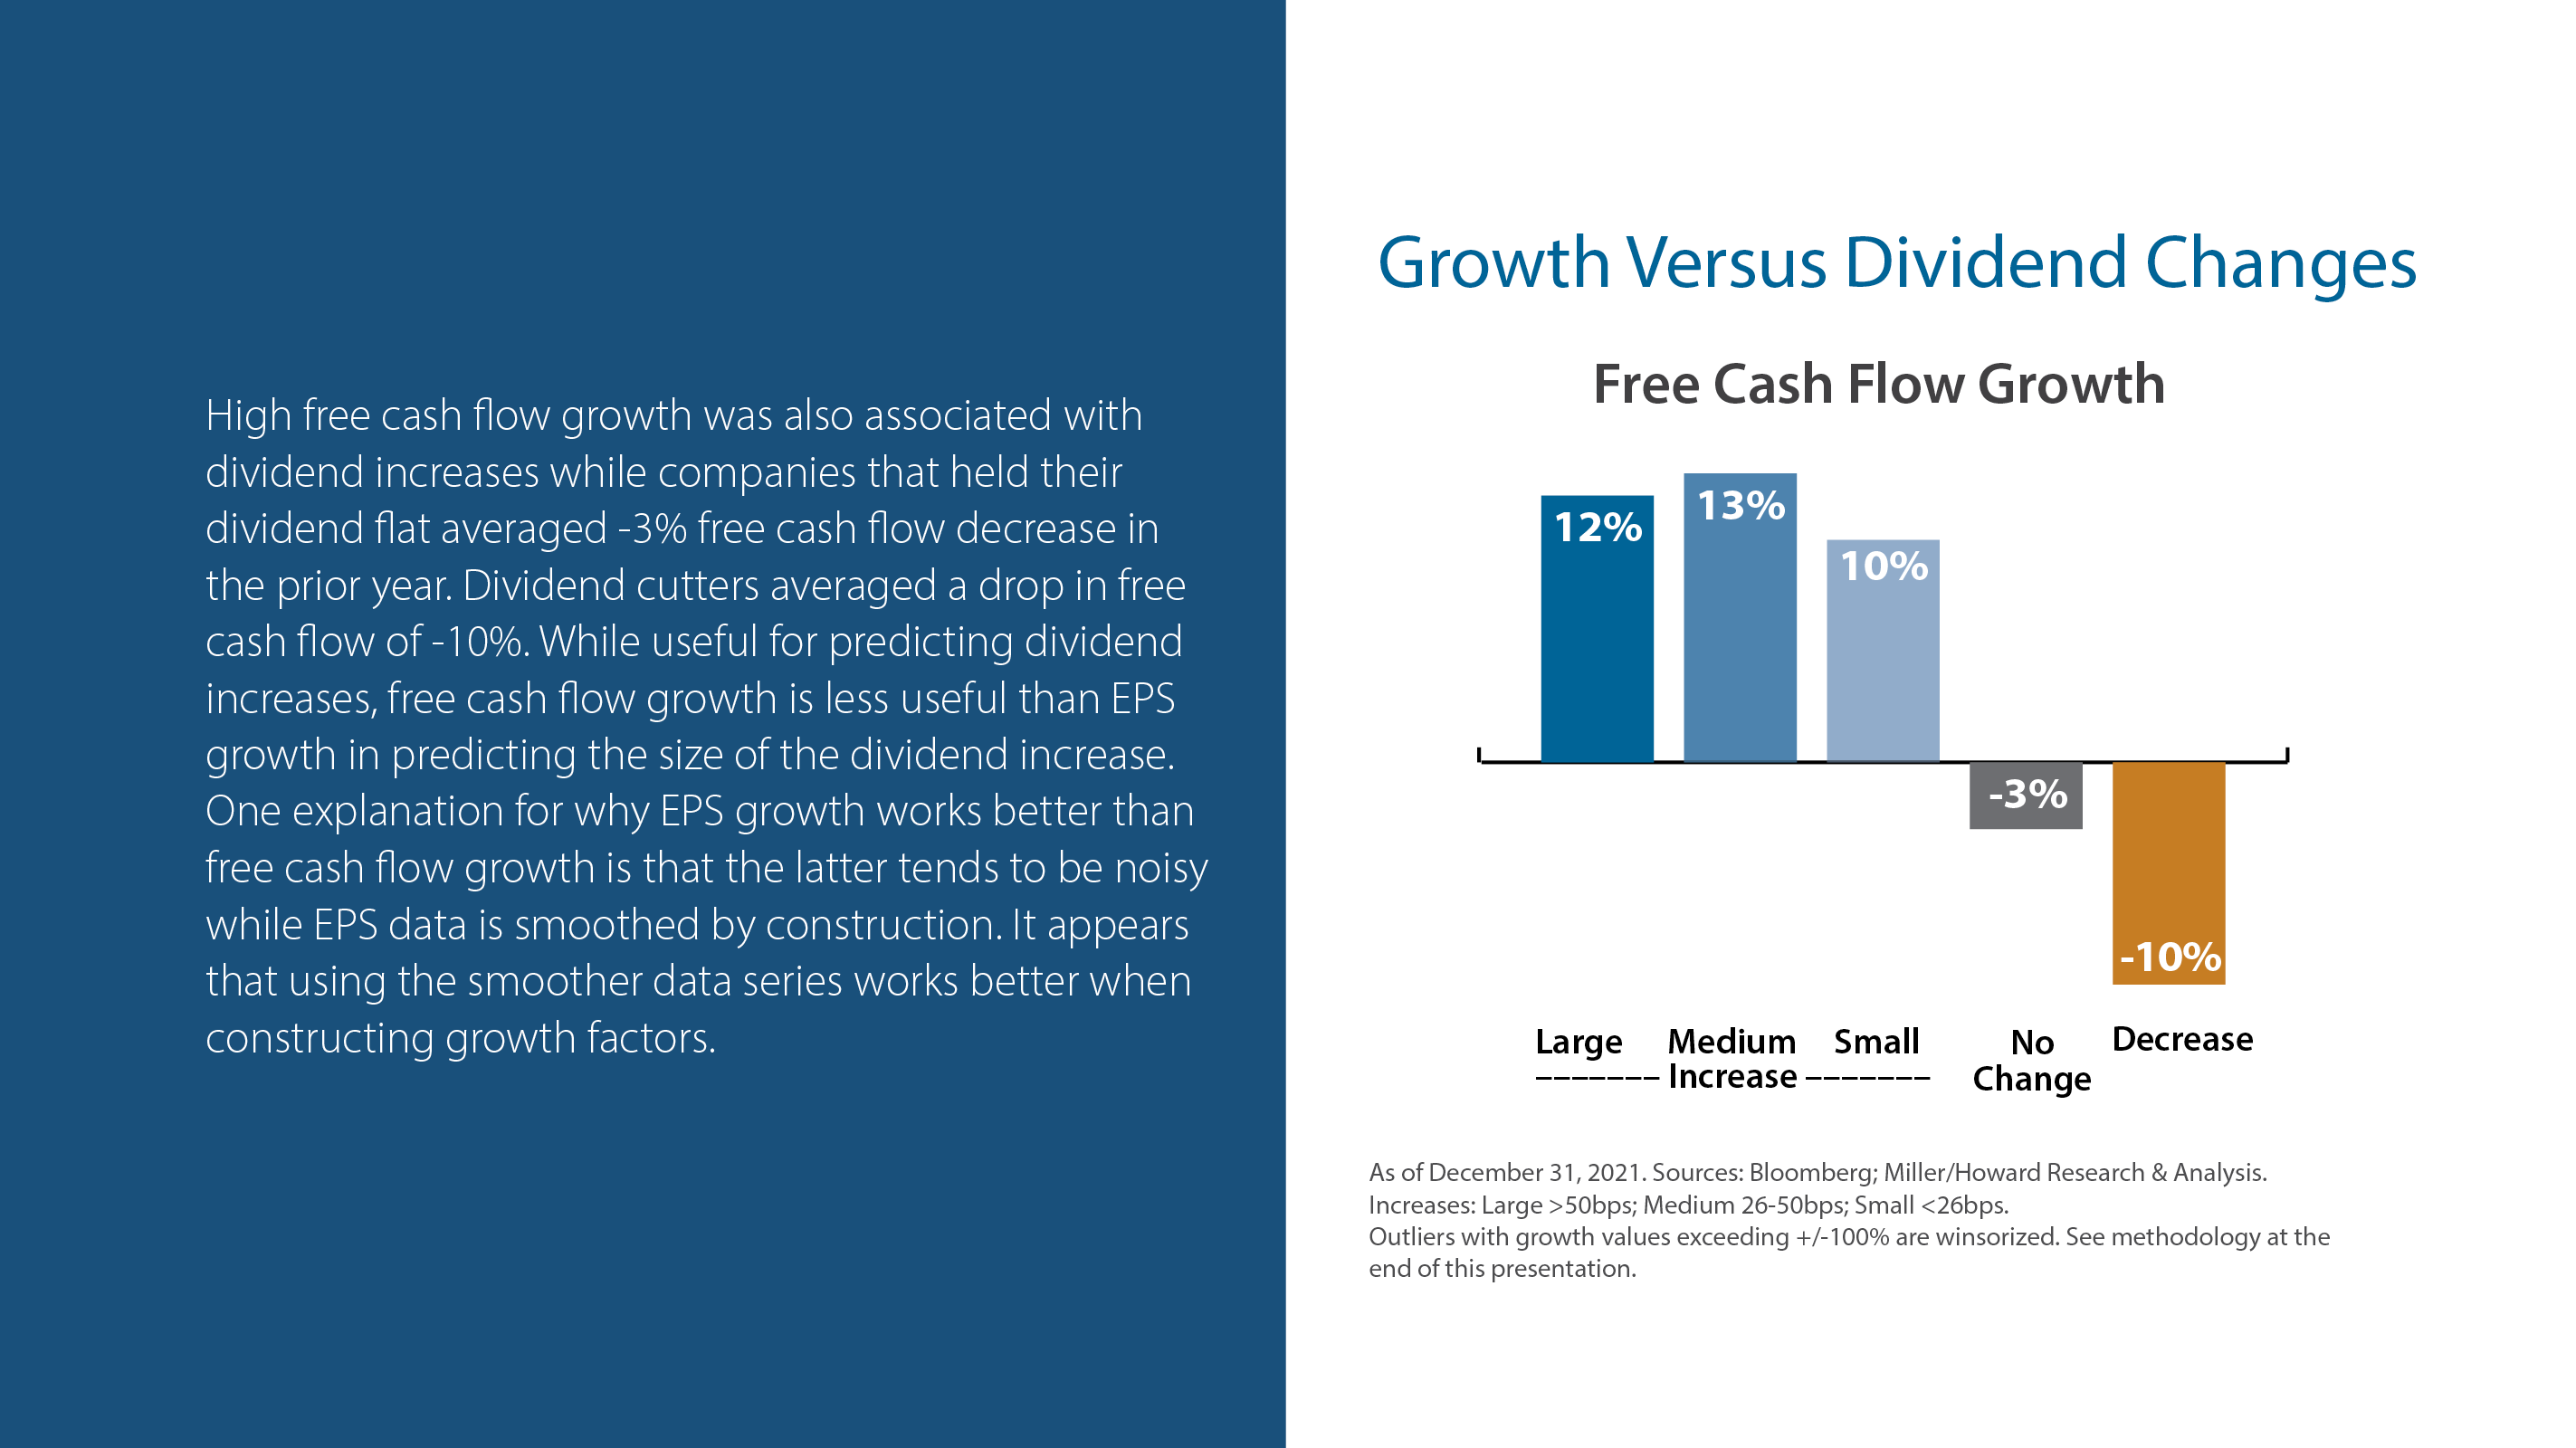 Growth Versus Dividend Changes 2 - Free Cash Flow Growth